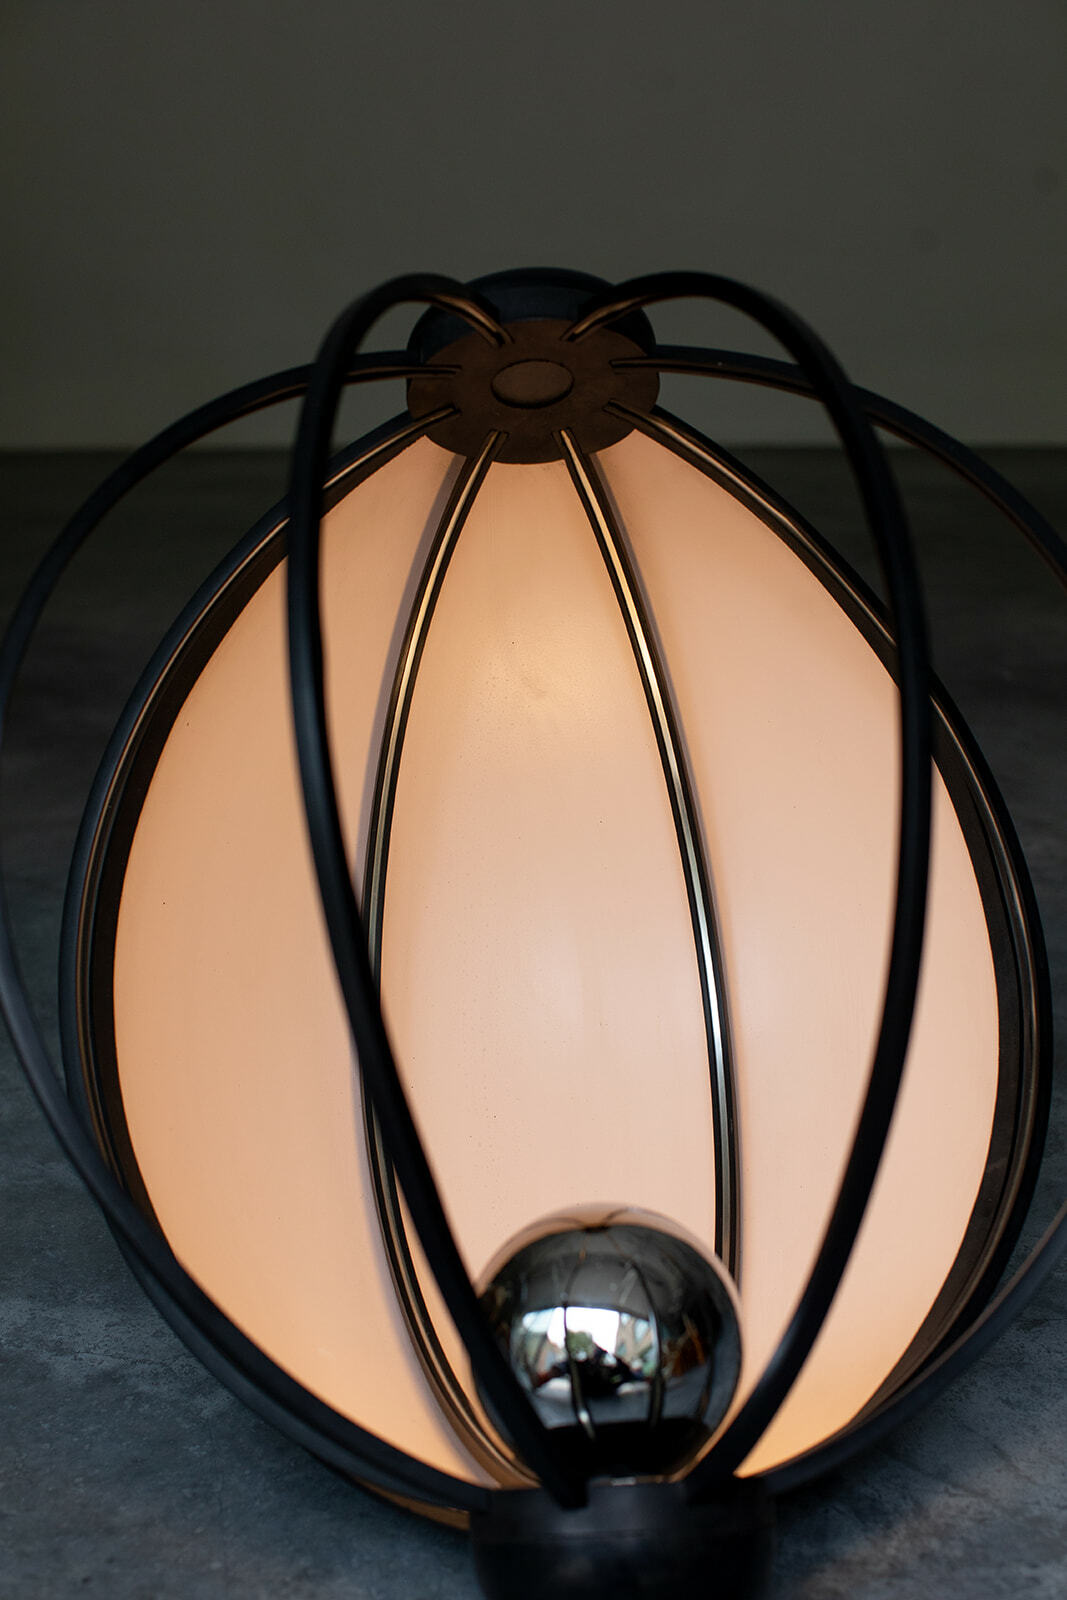 'Singa' lamp by Gae Aulenti for Francesconi